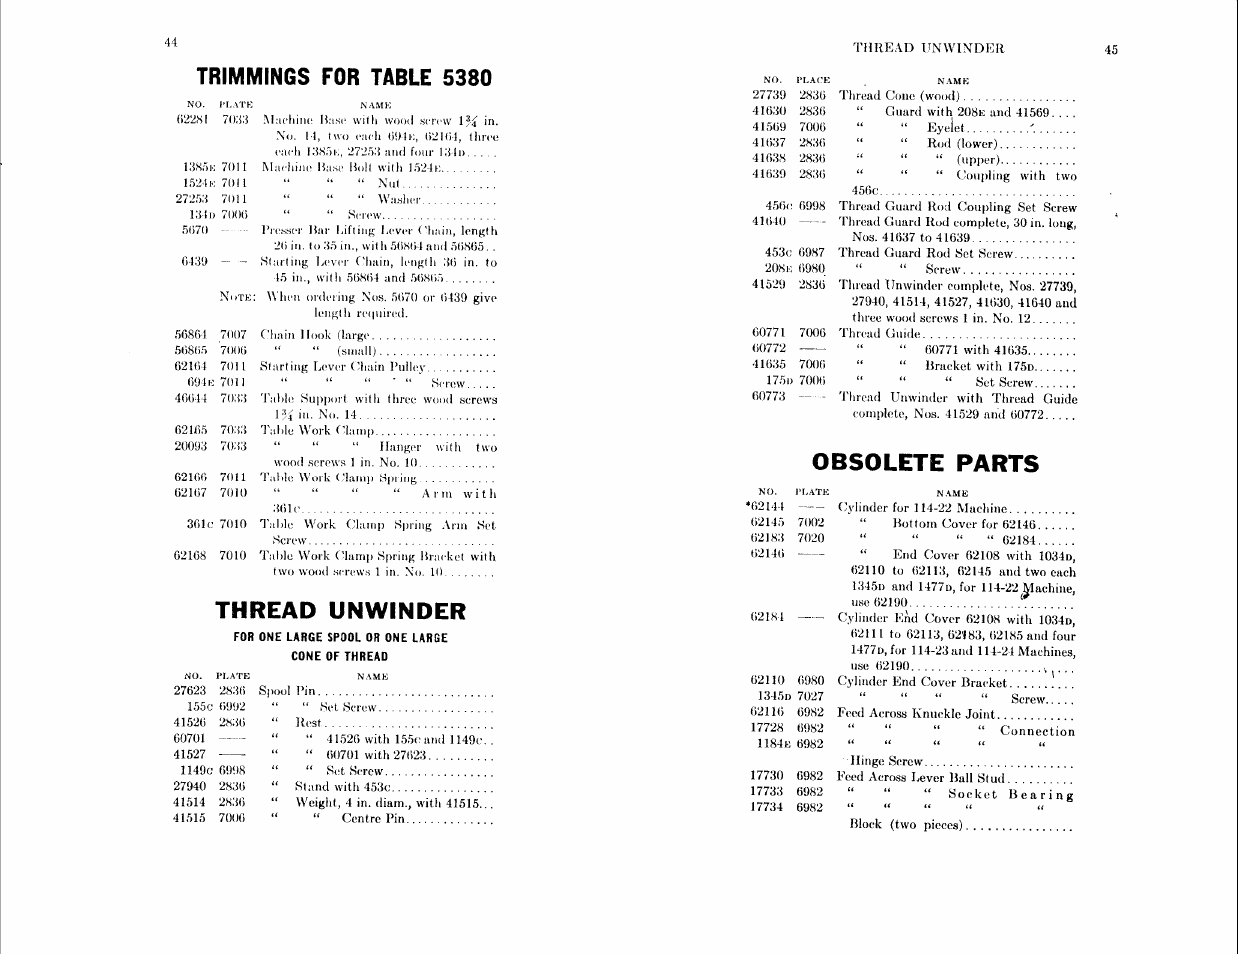 Thread unwinder, Obsolete parts | SINGER 114-24 User Manual | Page 22 / 45